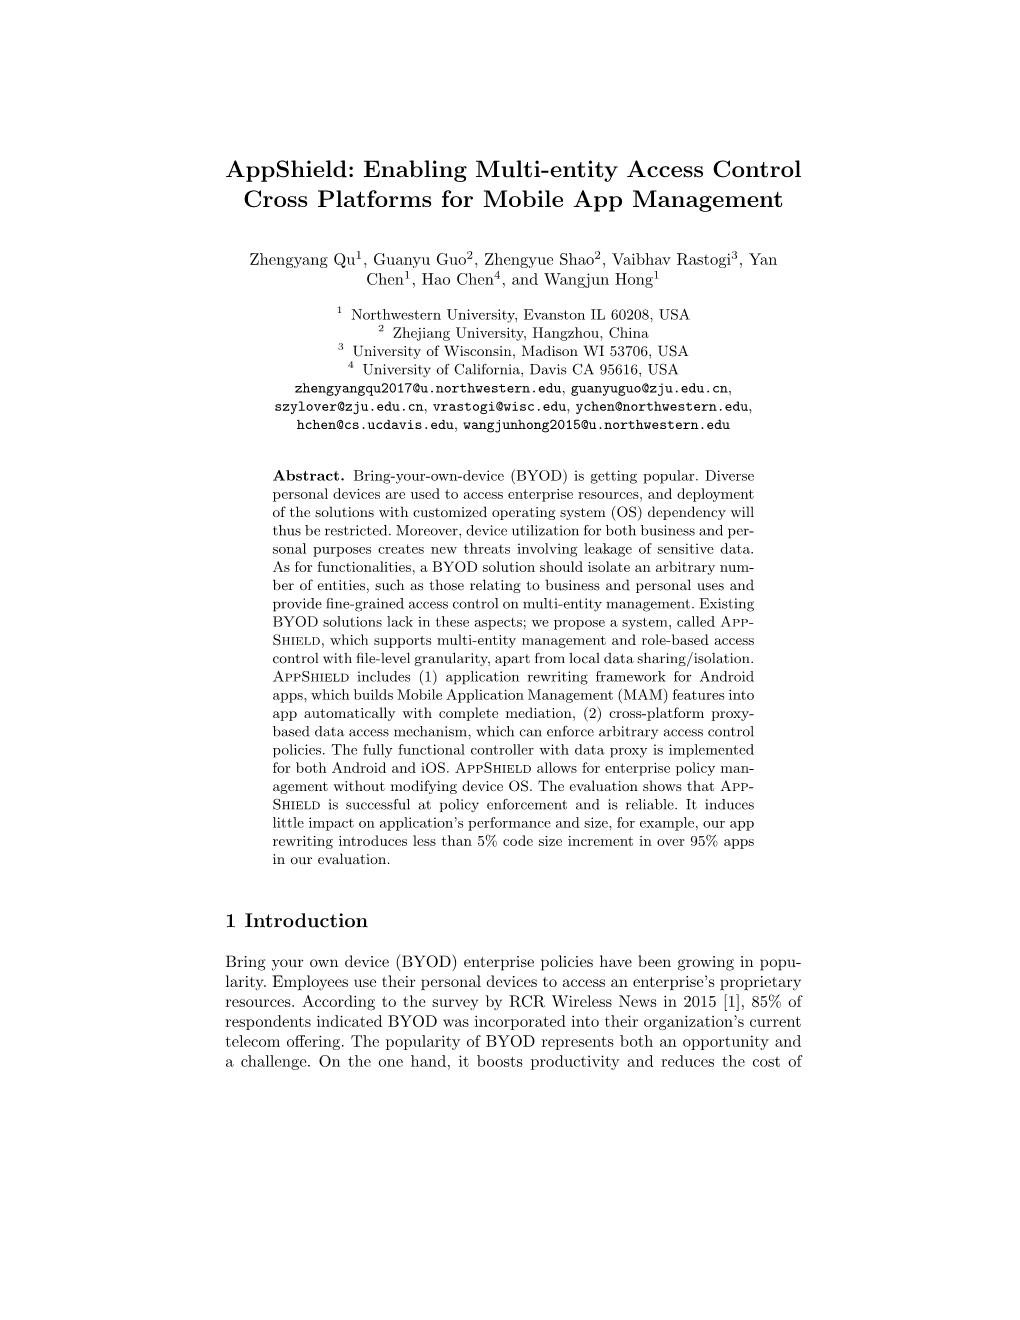 Appshield: Enabling Multi-Entity Access Control Cross Platforms for Mobile App Management